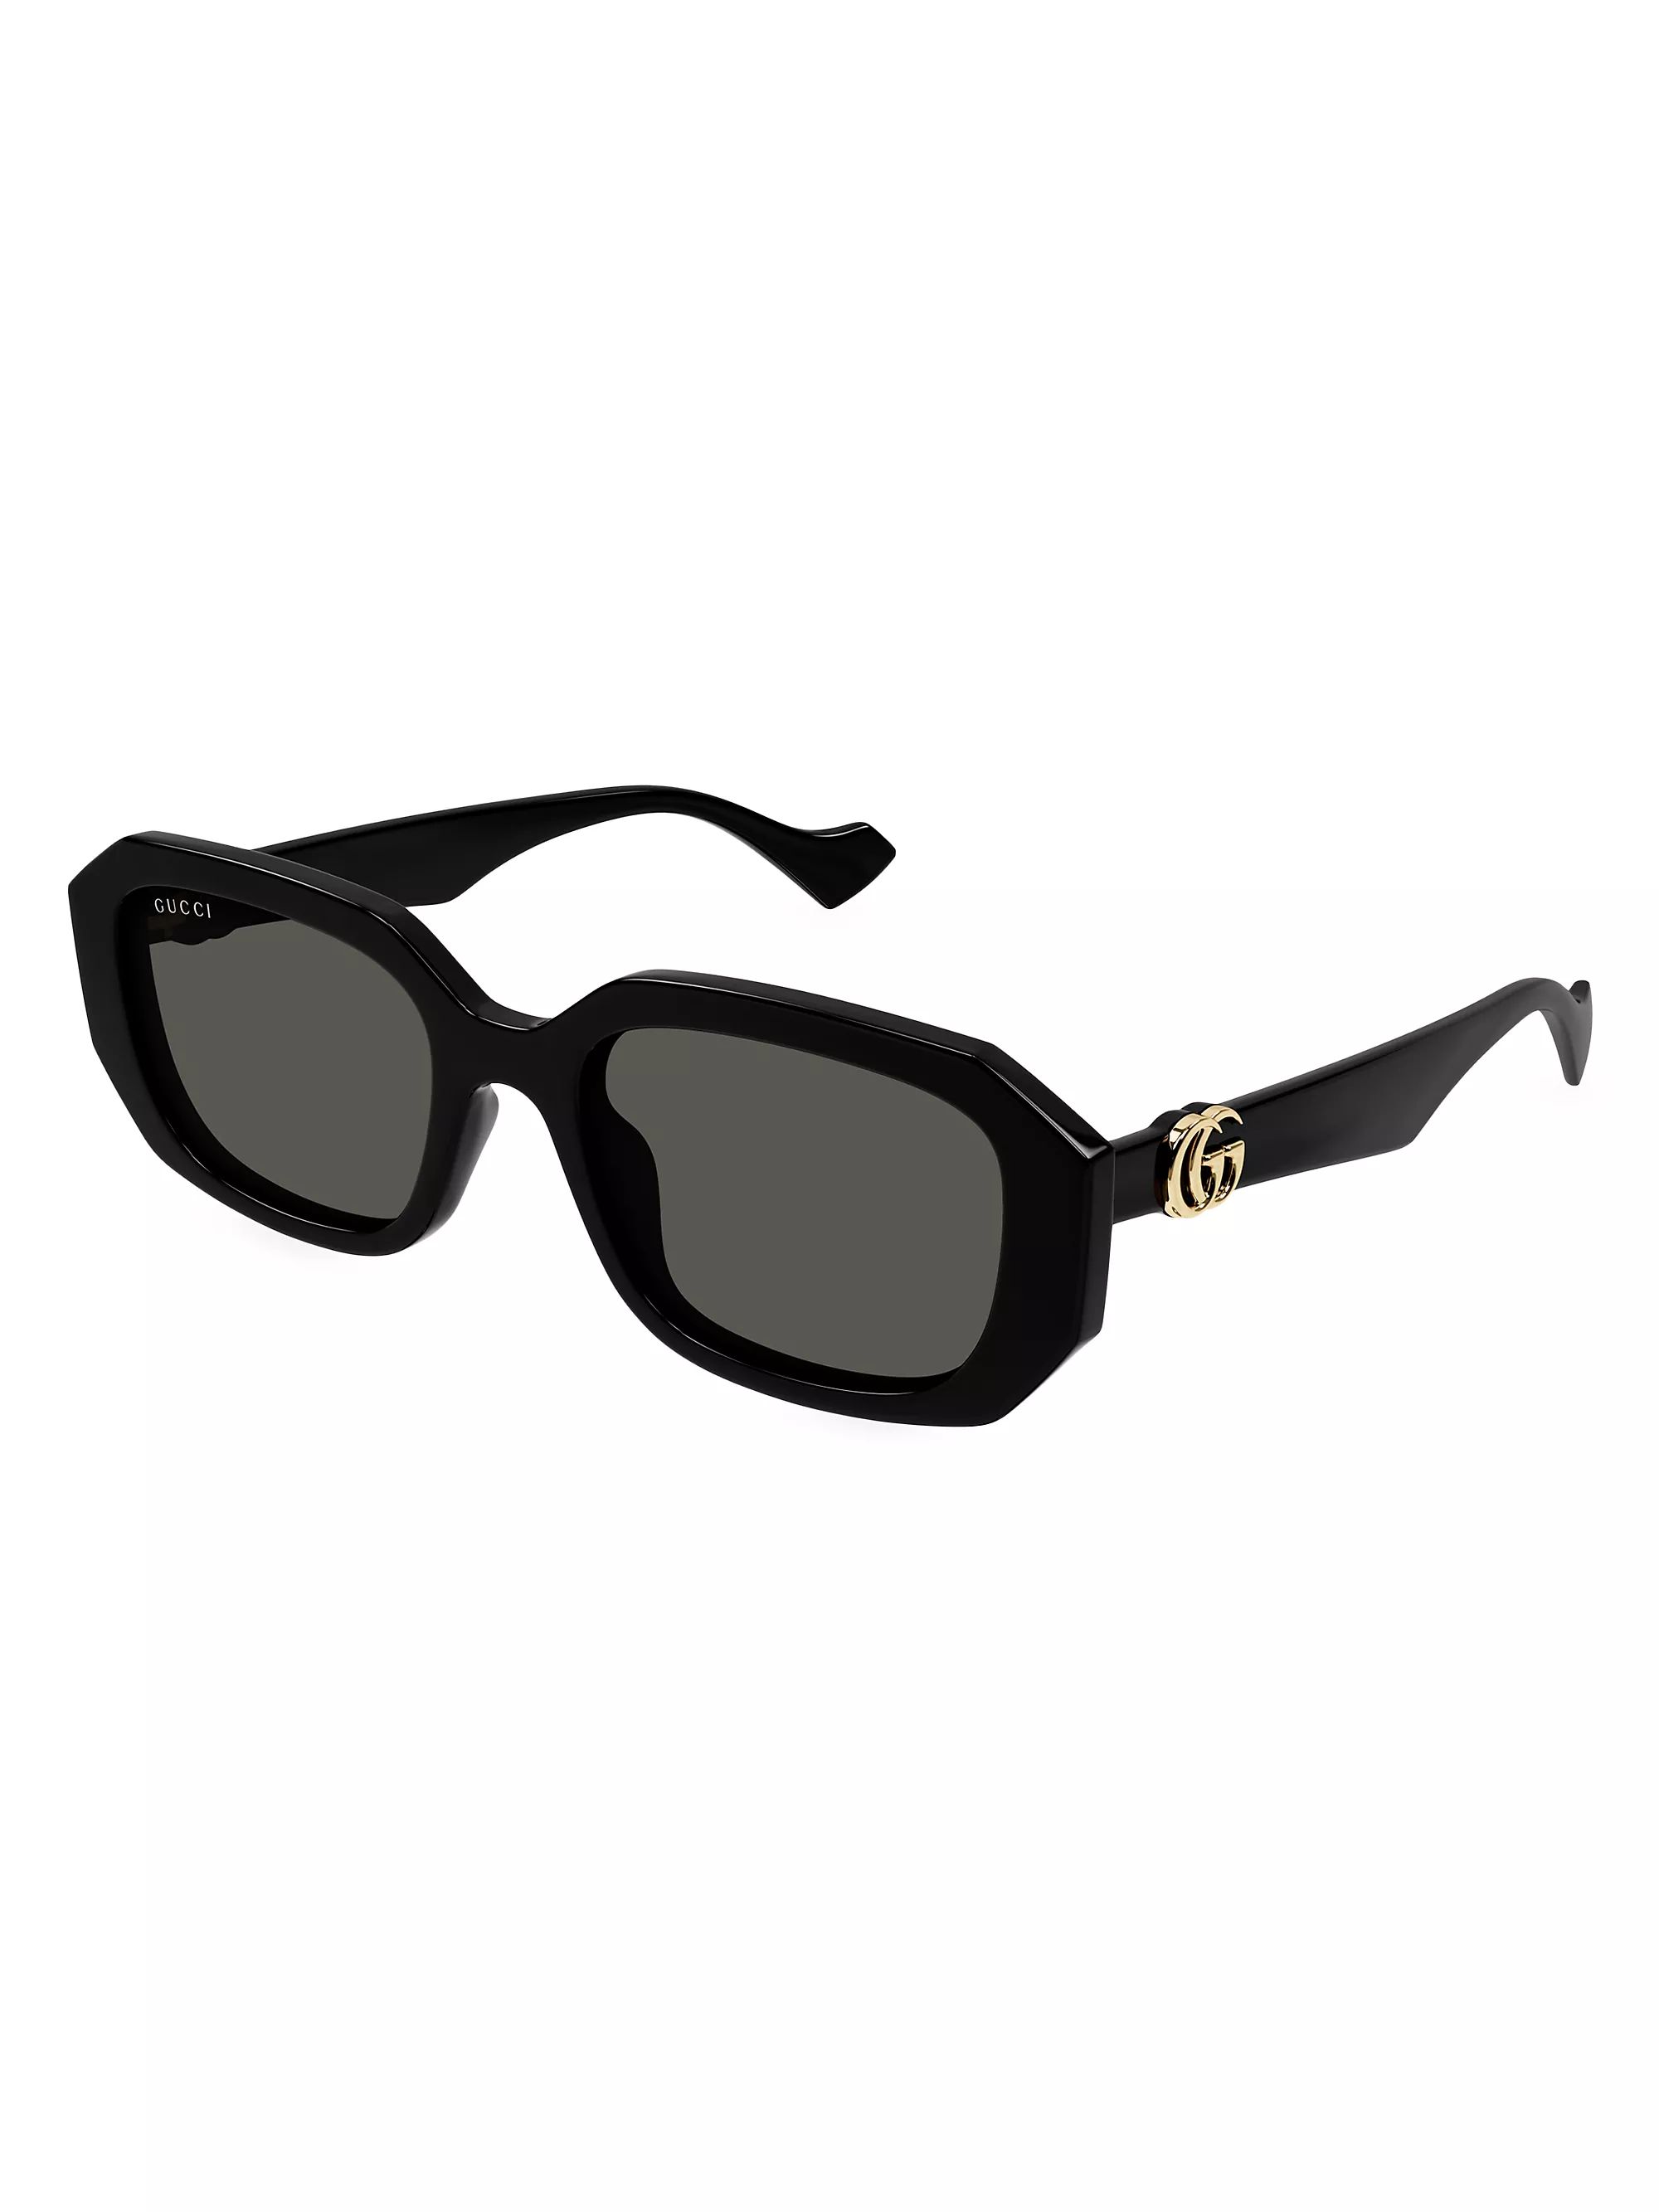 GG Generation Light 54MM Rectangular Sunglasses | Saks Fifth Avenue